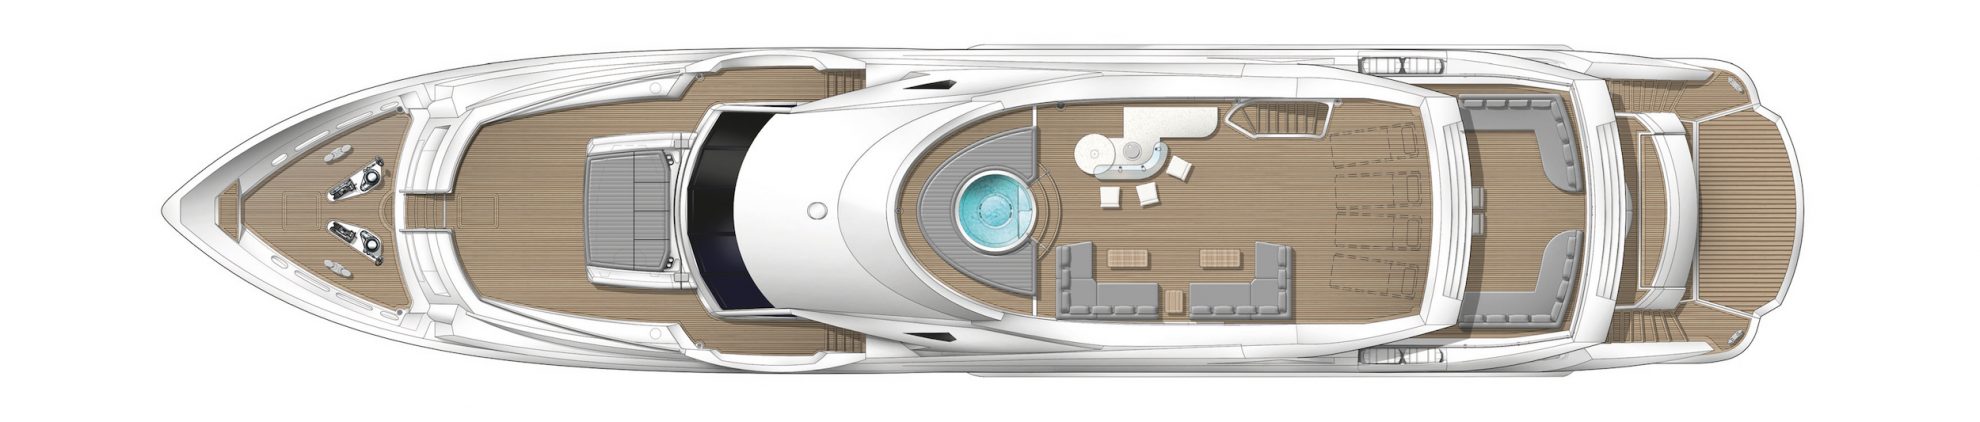 sunseeker 131 yacht interior